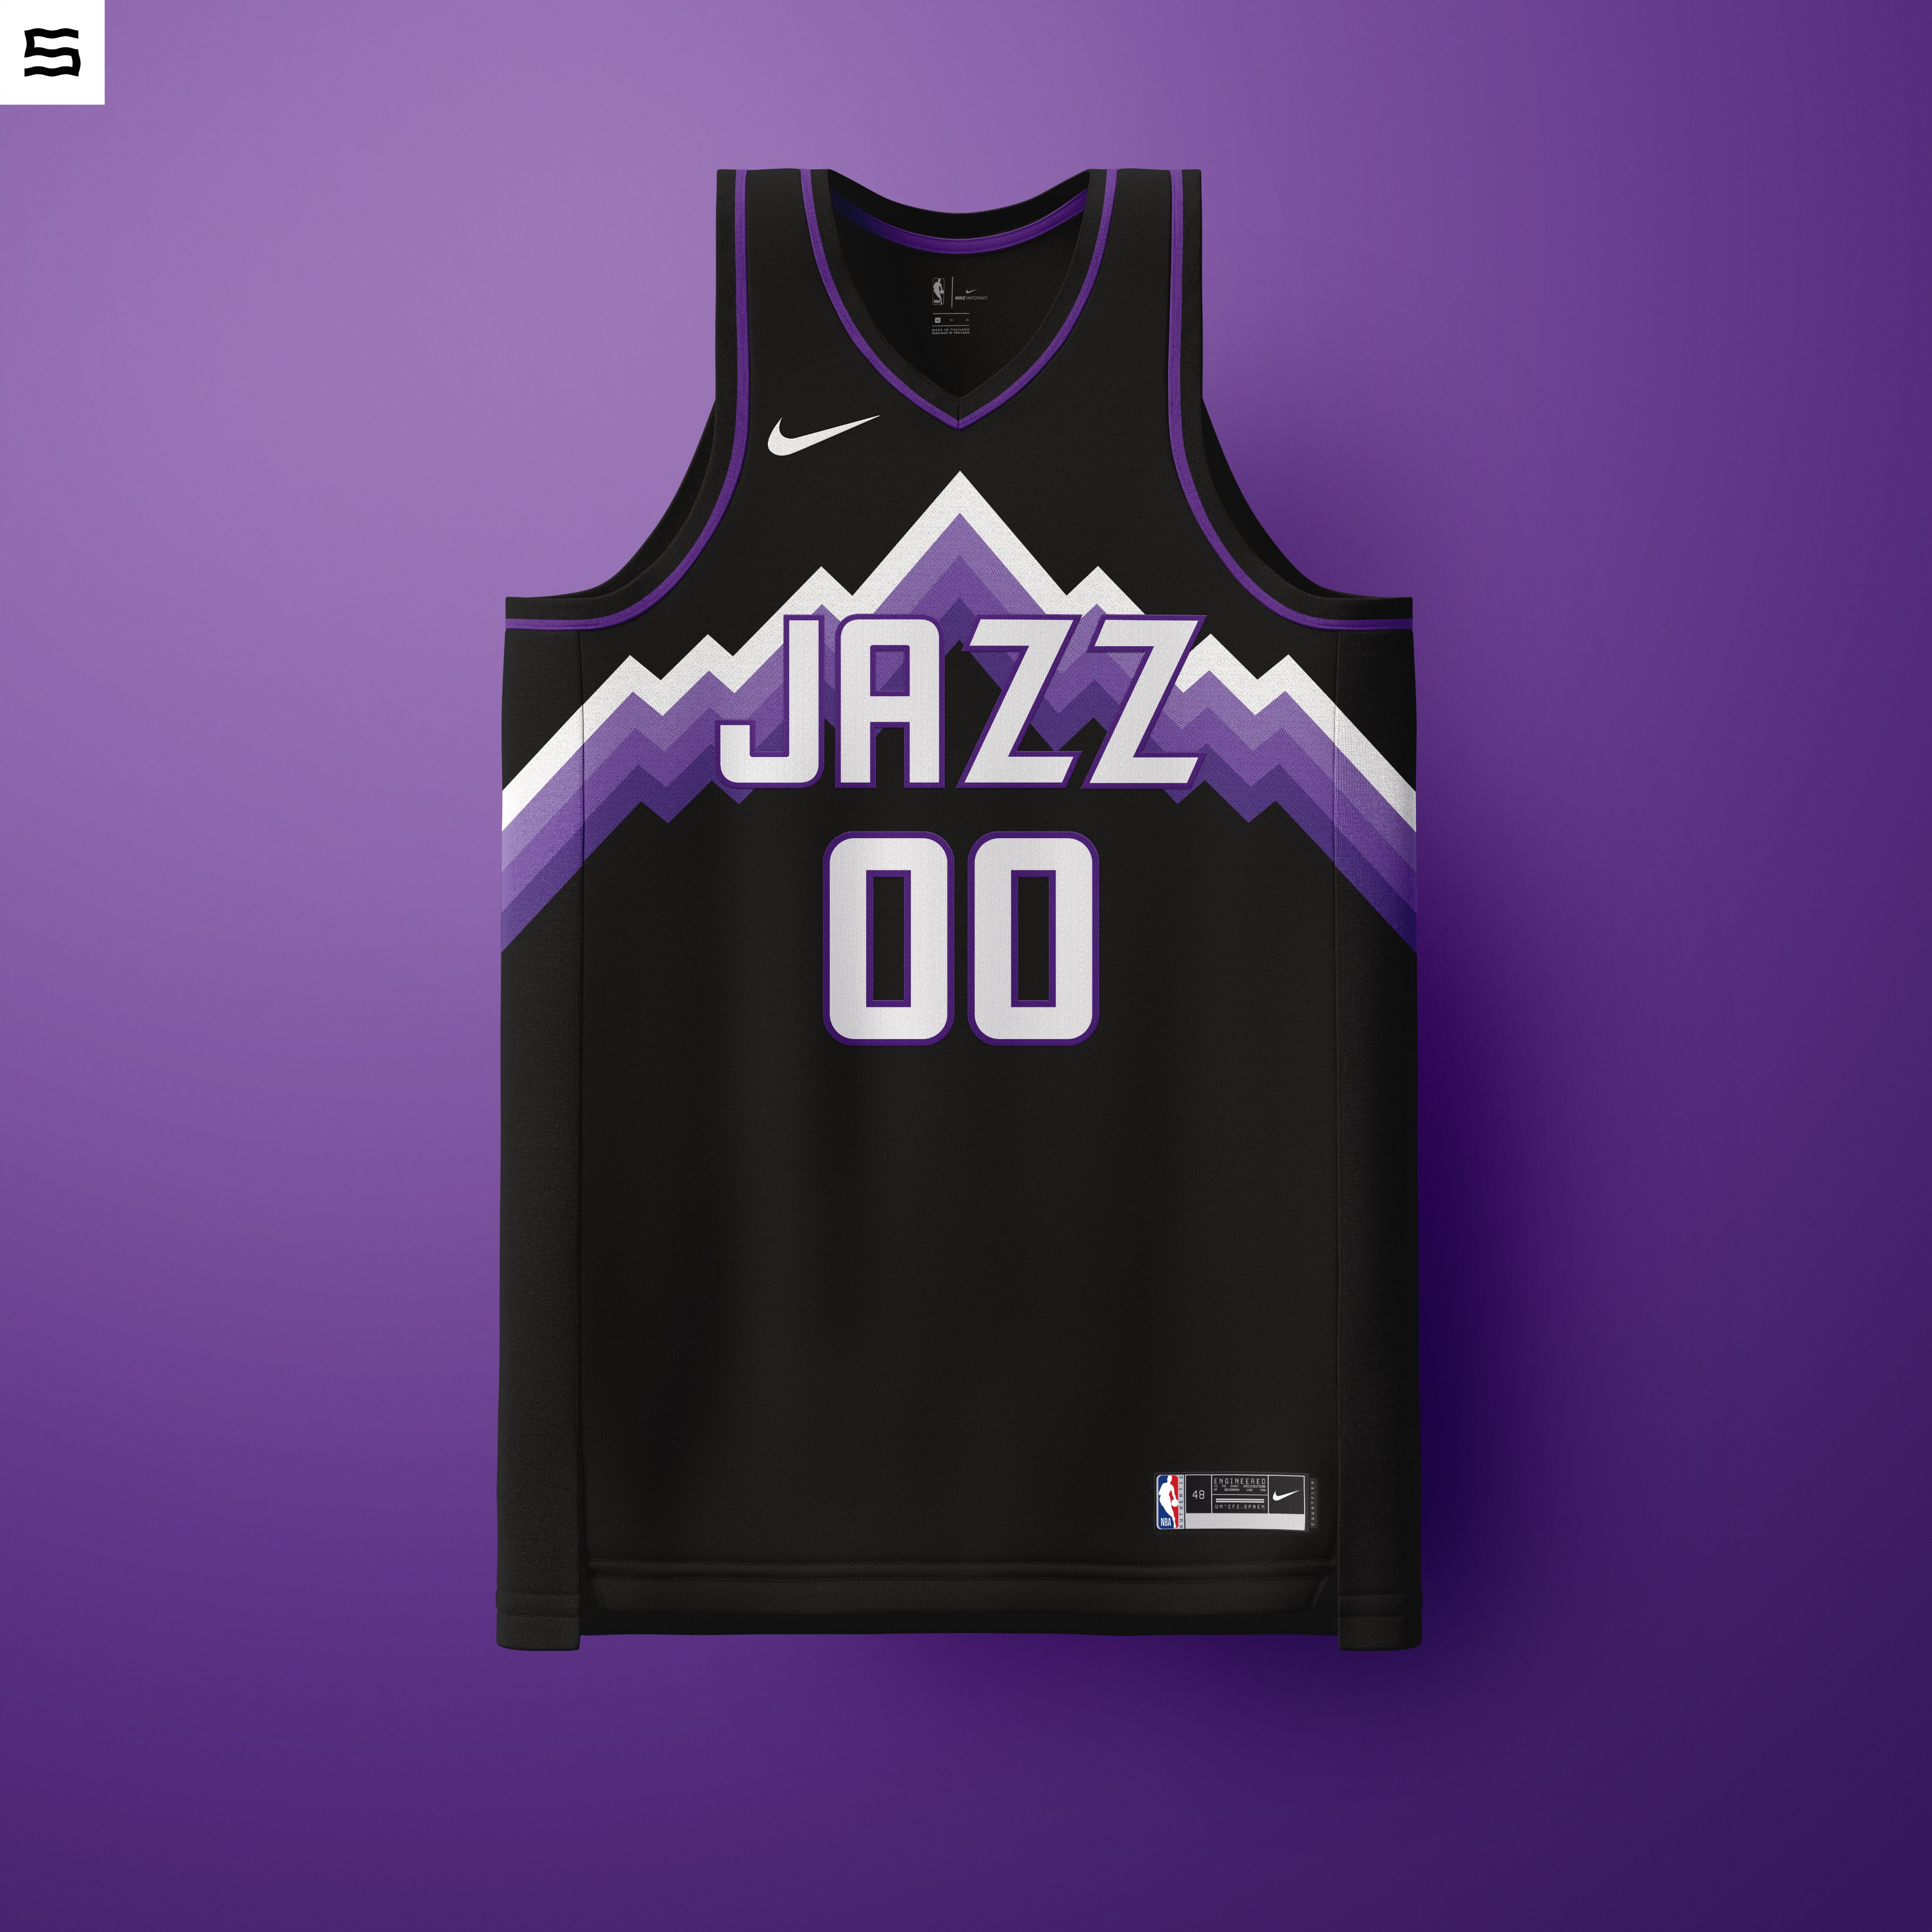 New Jazz Jersey posted on Twitter. : r/UtahJazz